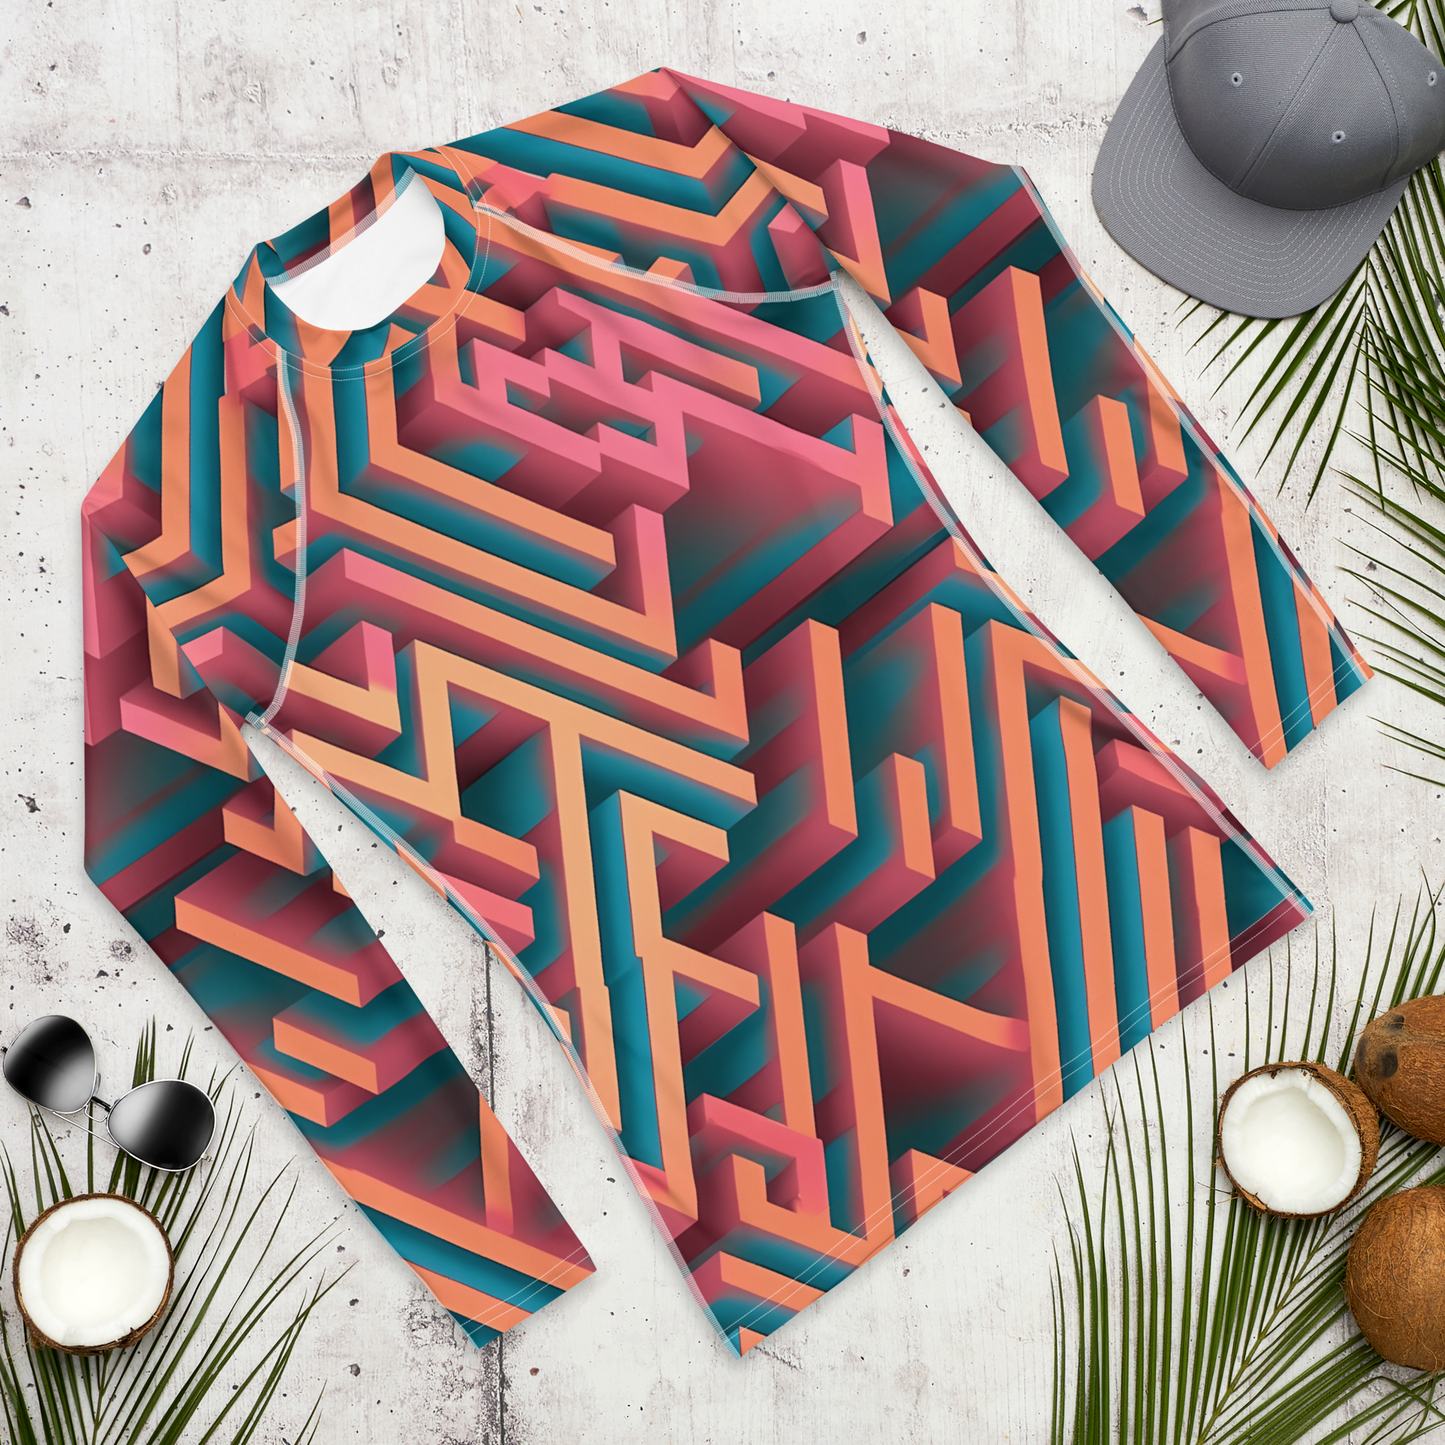 3D Maze Illusion | 3D Patterns | All-Over Print Men's Rash Guard - #1